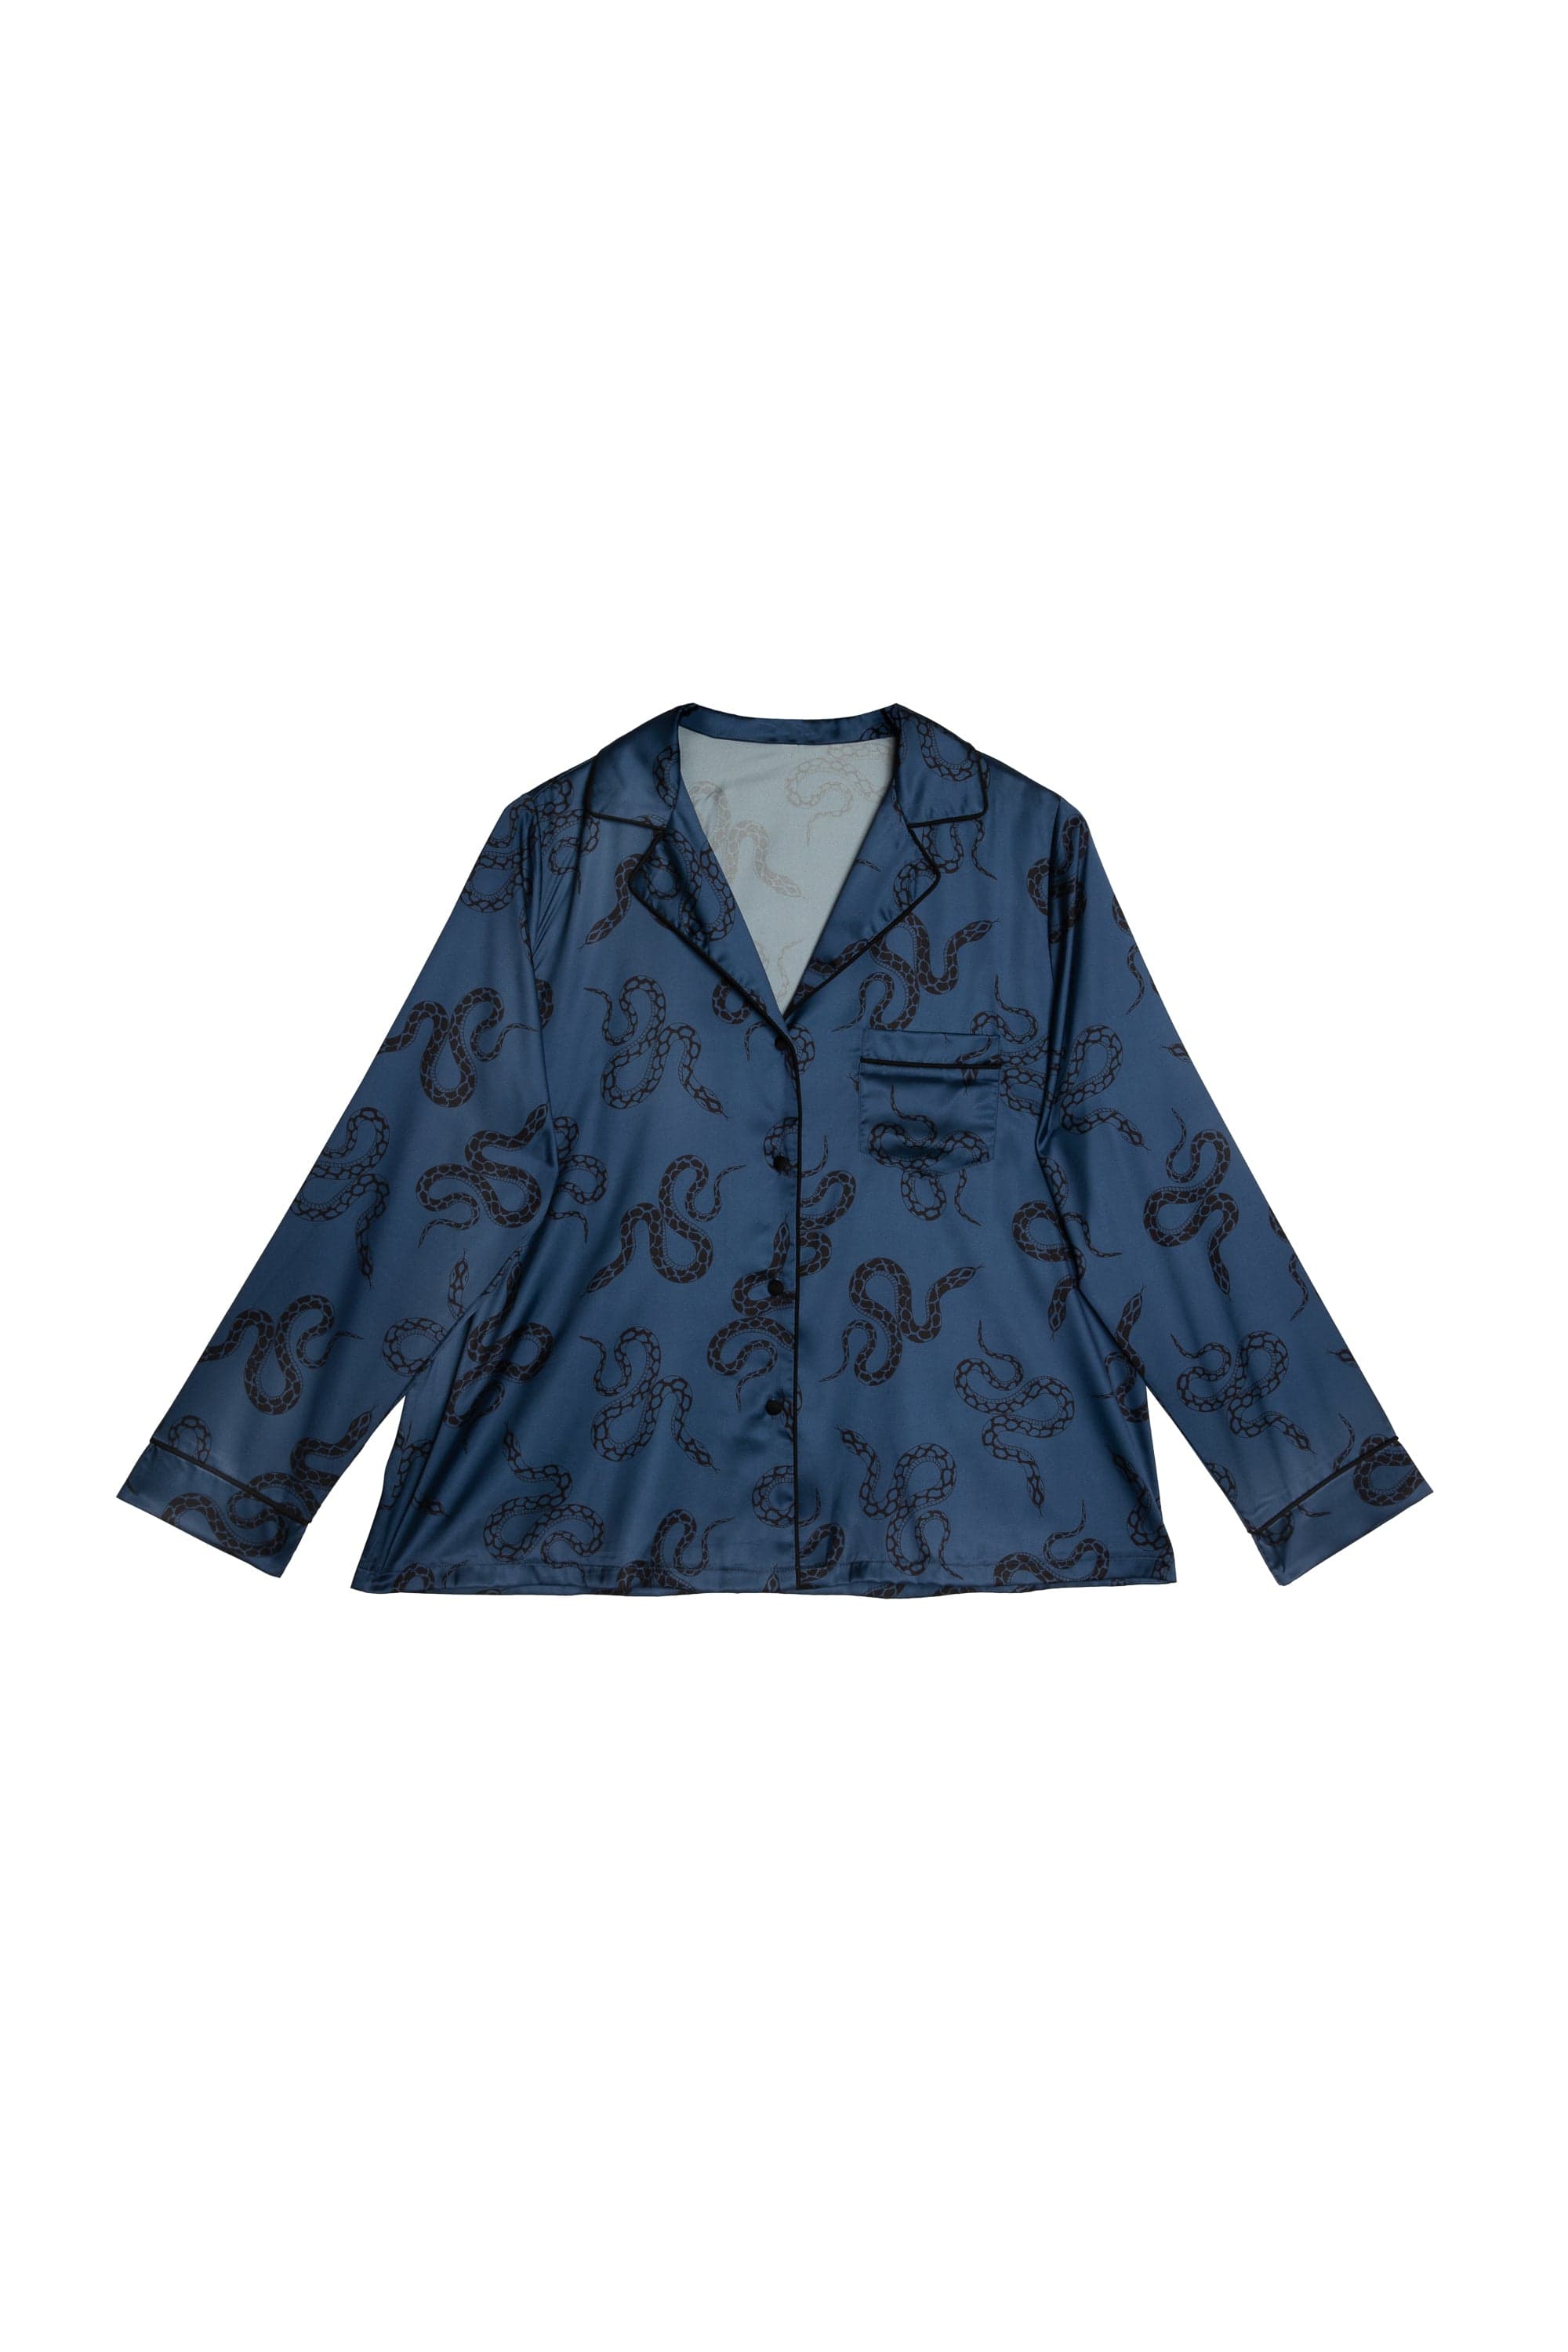 Blue Satin Snake Print Long Sleeve Pyjama Set